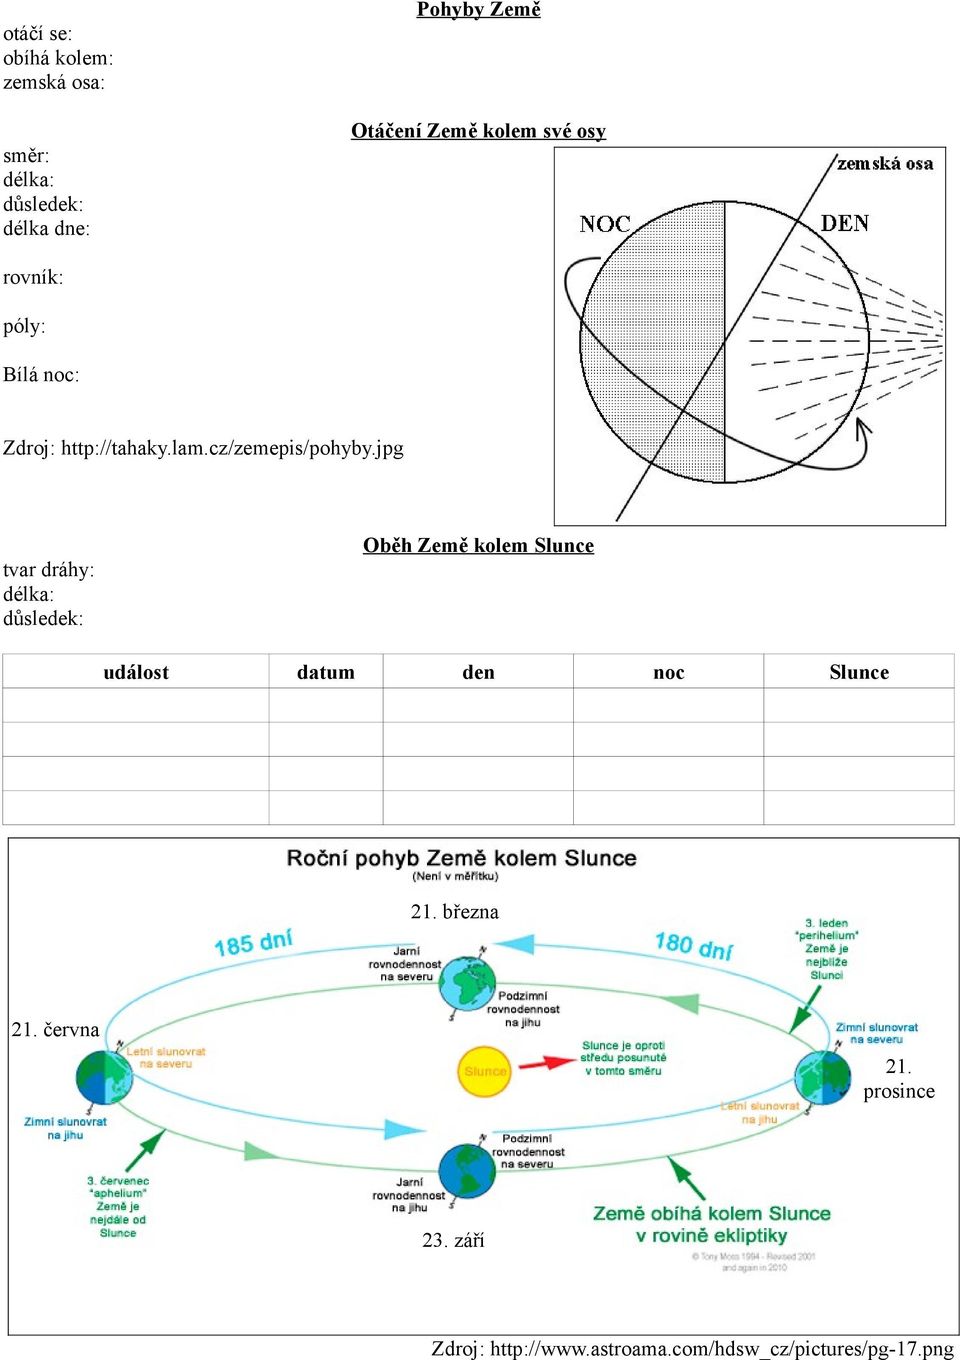 jpg Oběh Země kolem Slunce tvar dráhy: délka: důsledek: událost datum den noc Slunce 21.